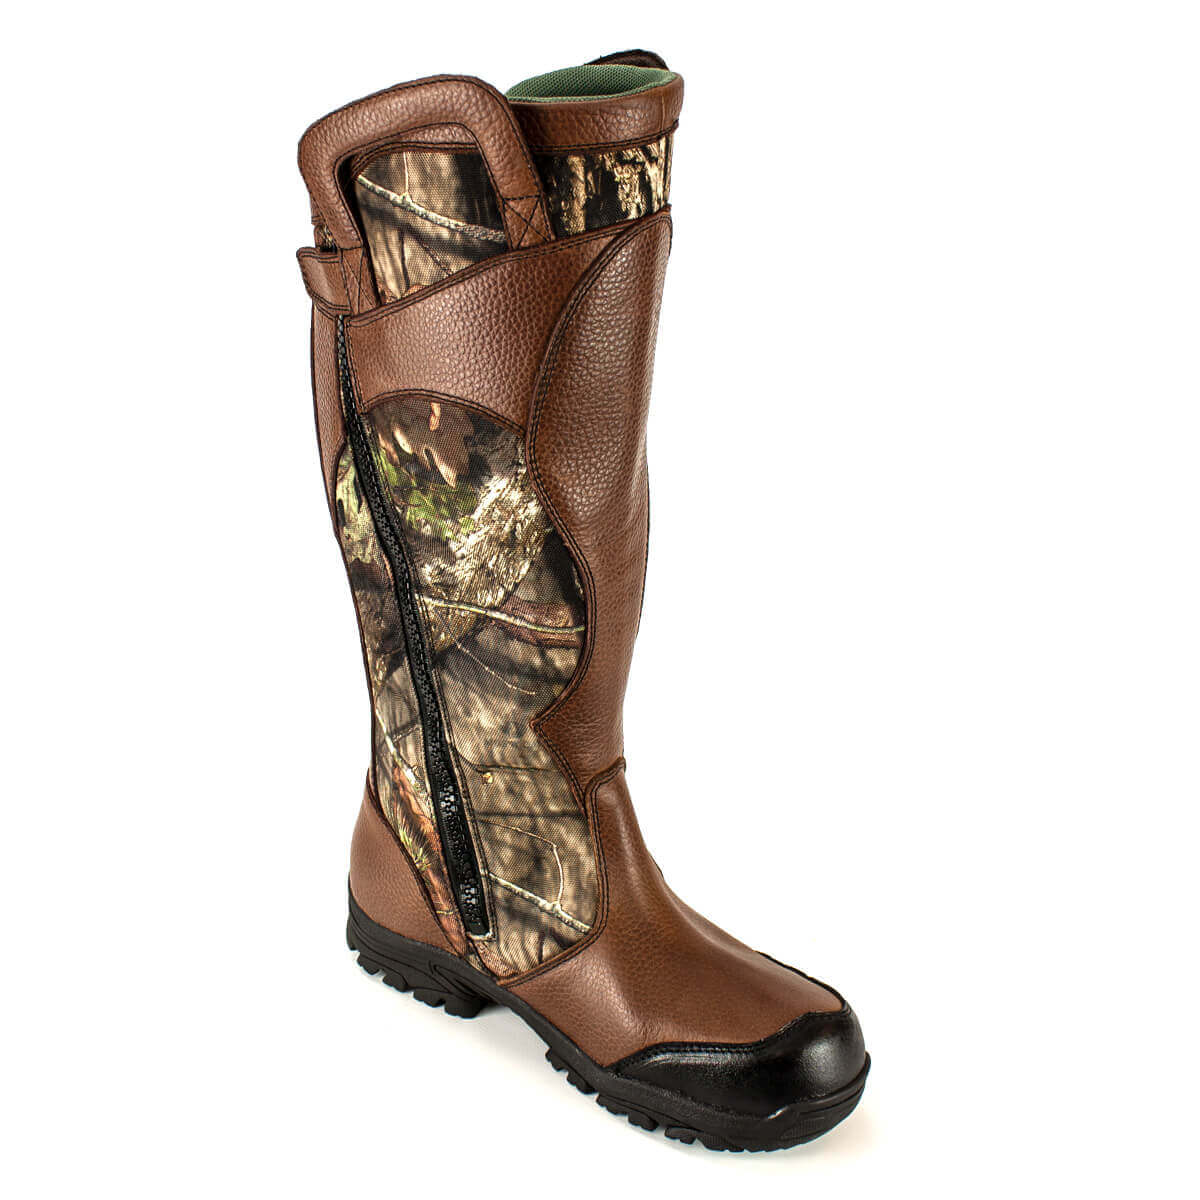 bottomland snake boots